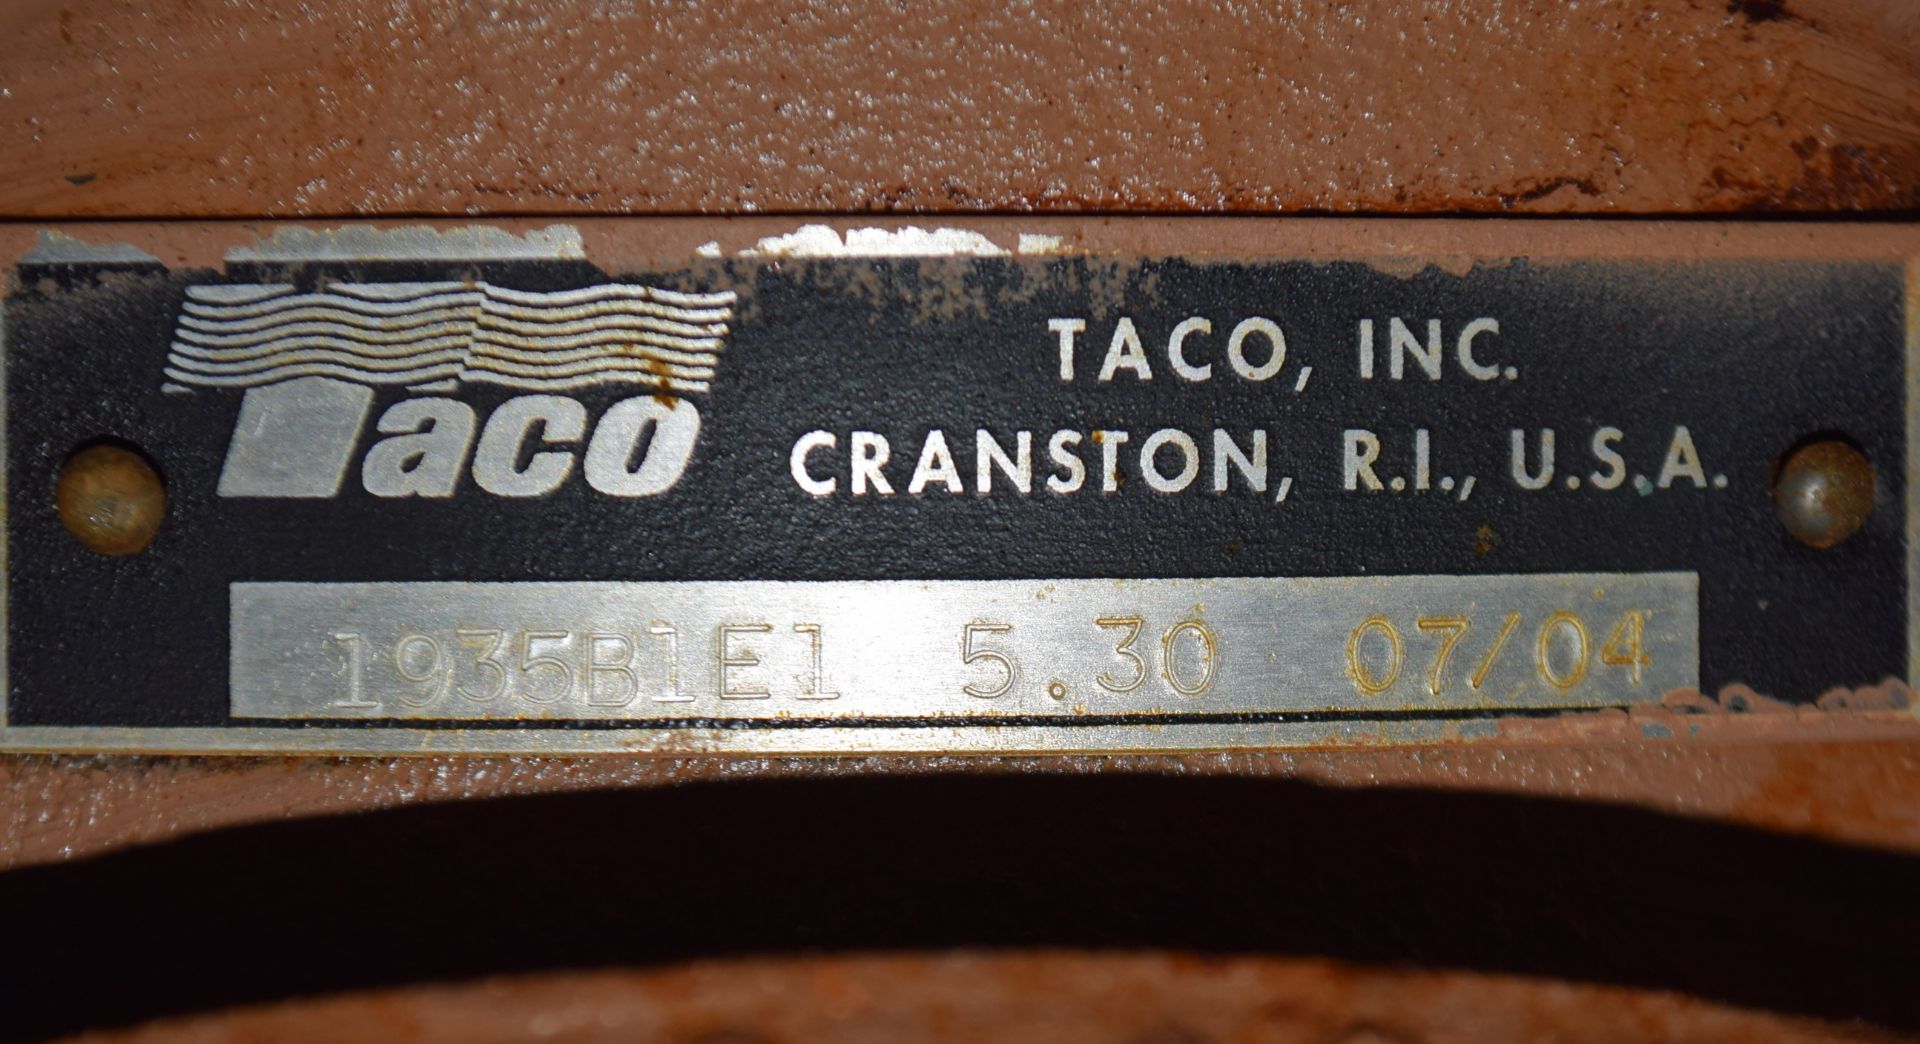 Taco Carbon Steel Pump, Model 1935B1E1, Serial# 5.30-07/04. Driven by a 3/4hp, 1/60/115/230 volt, - Image 4 of 4